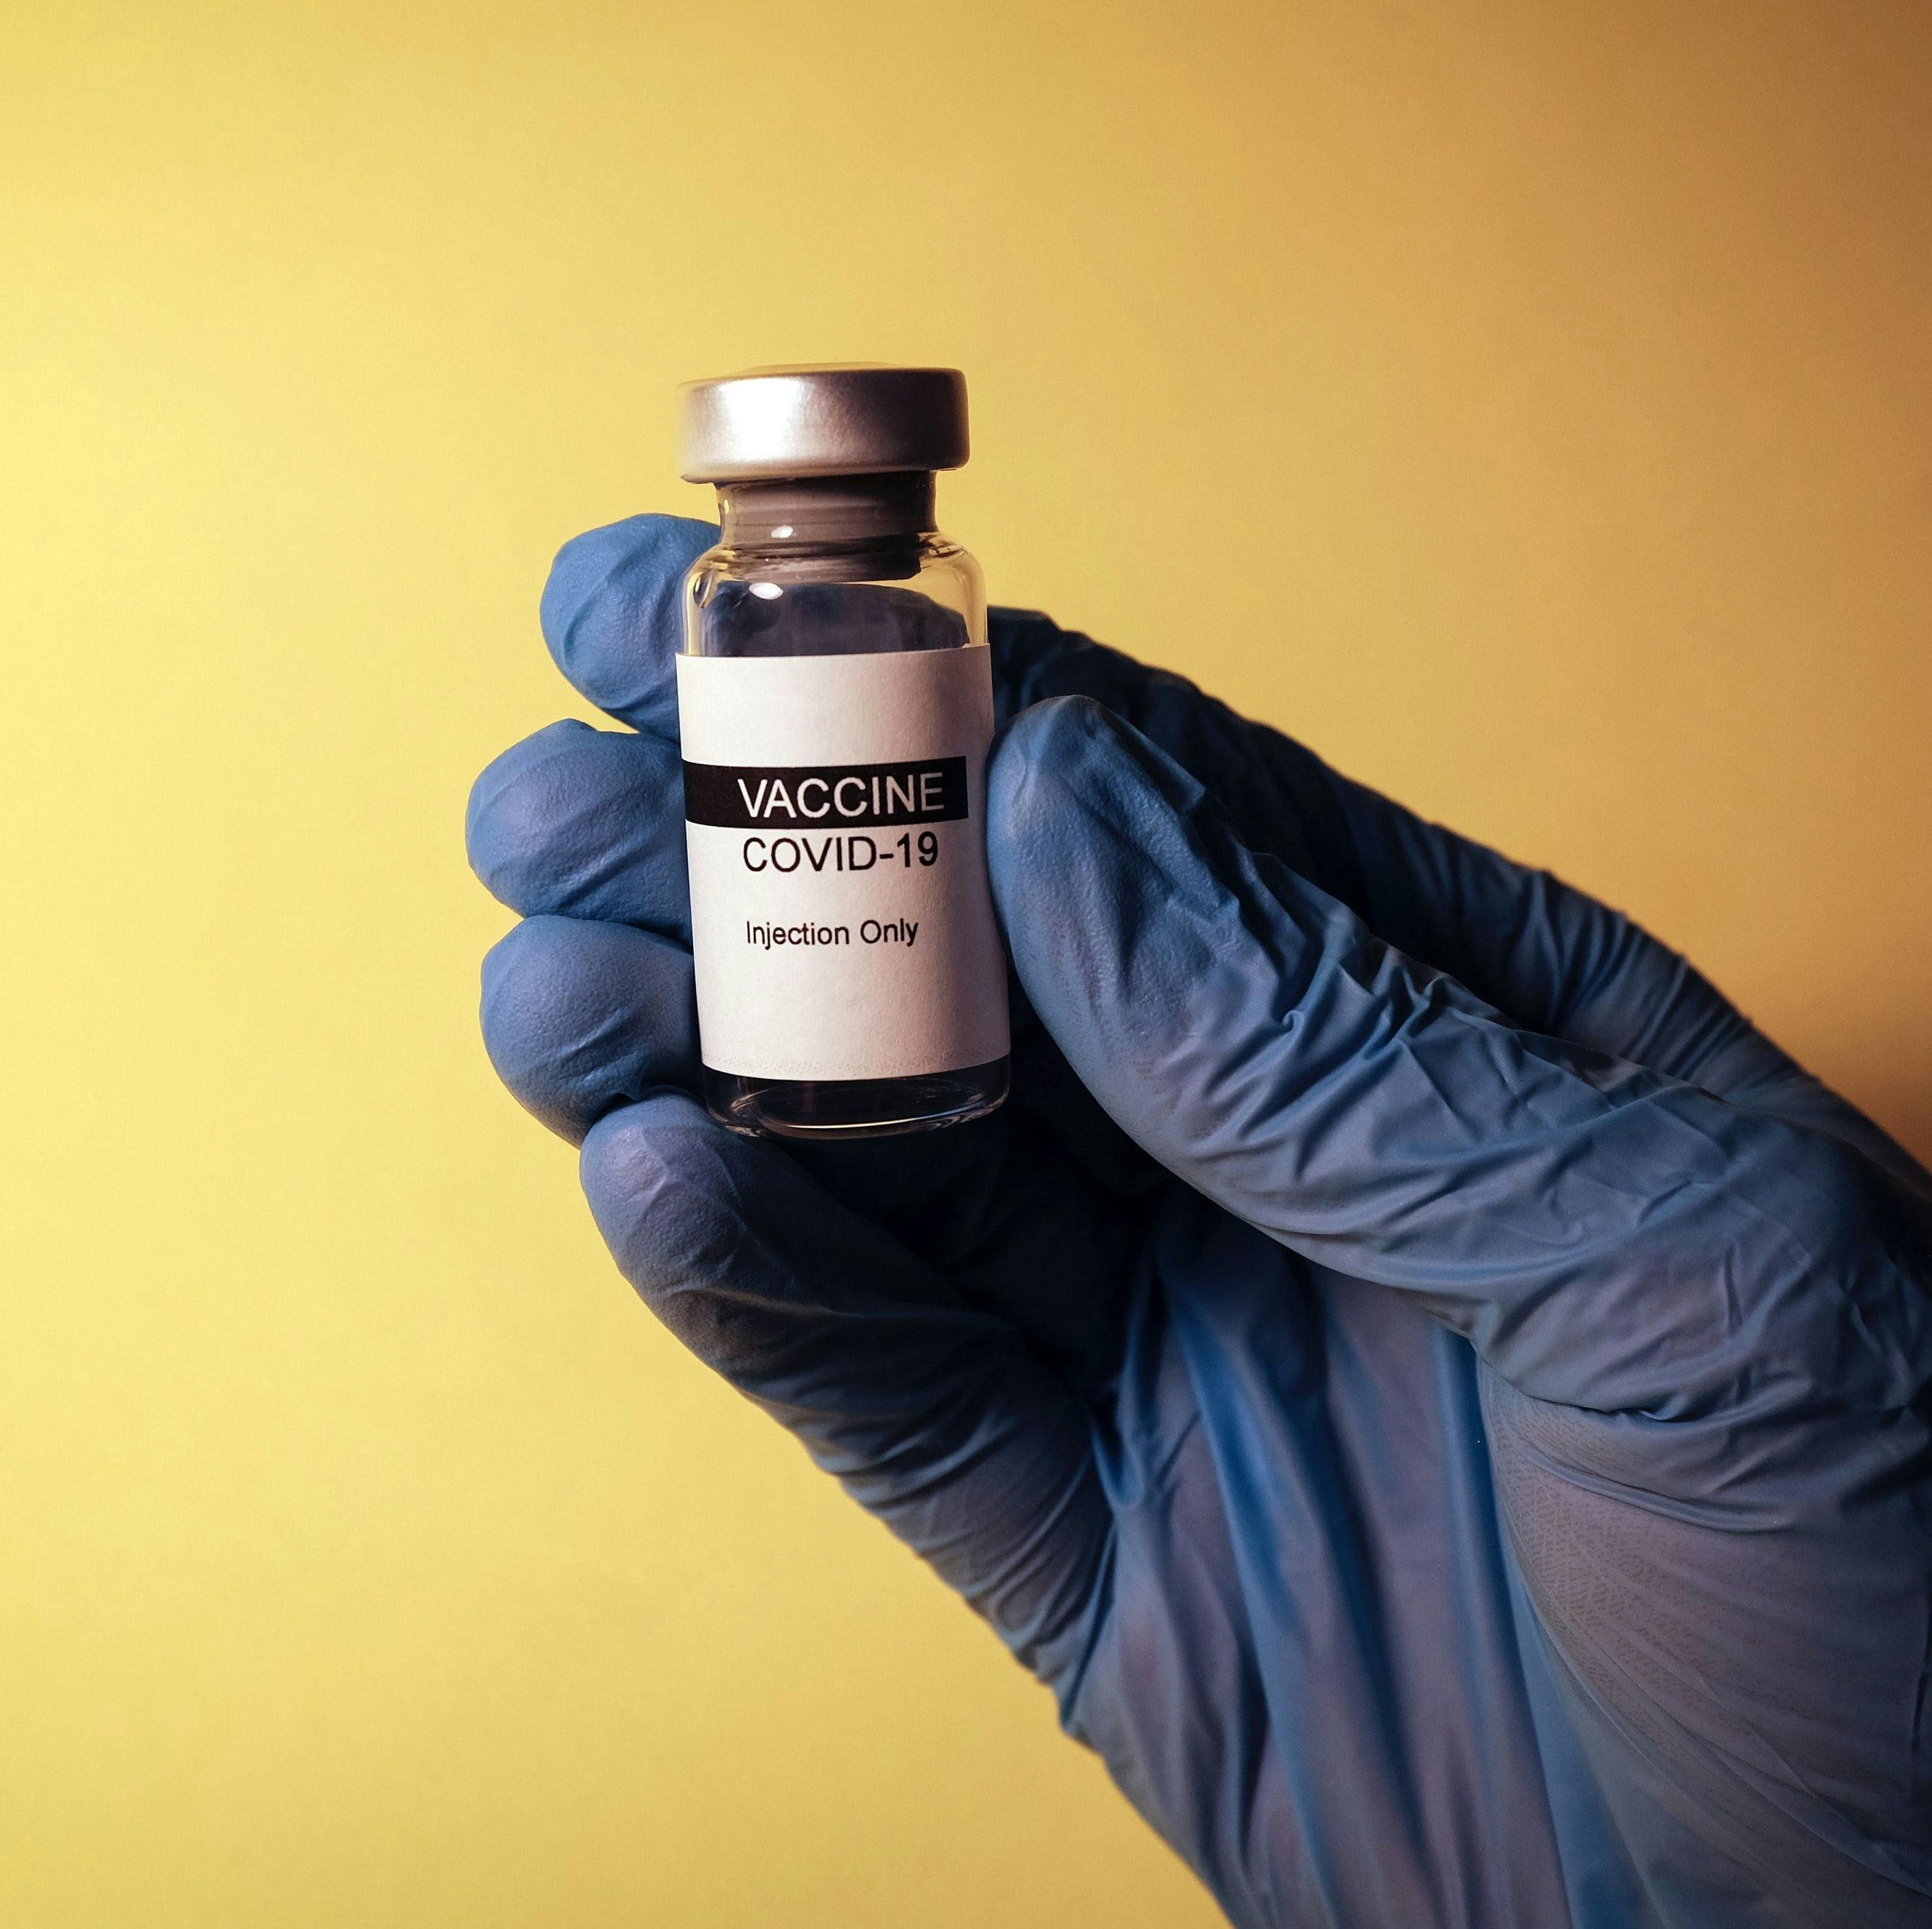 EU Turning Away From AstraZeneca Vaccine, Putting Hope in Pfizer-BioNTech